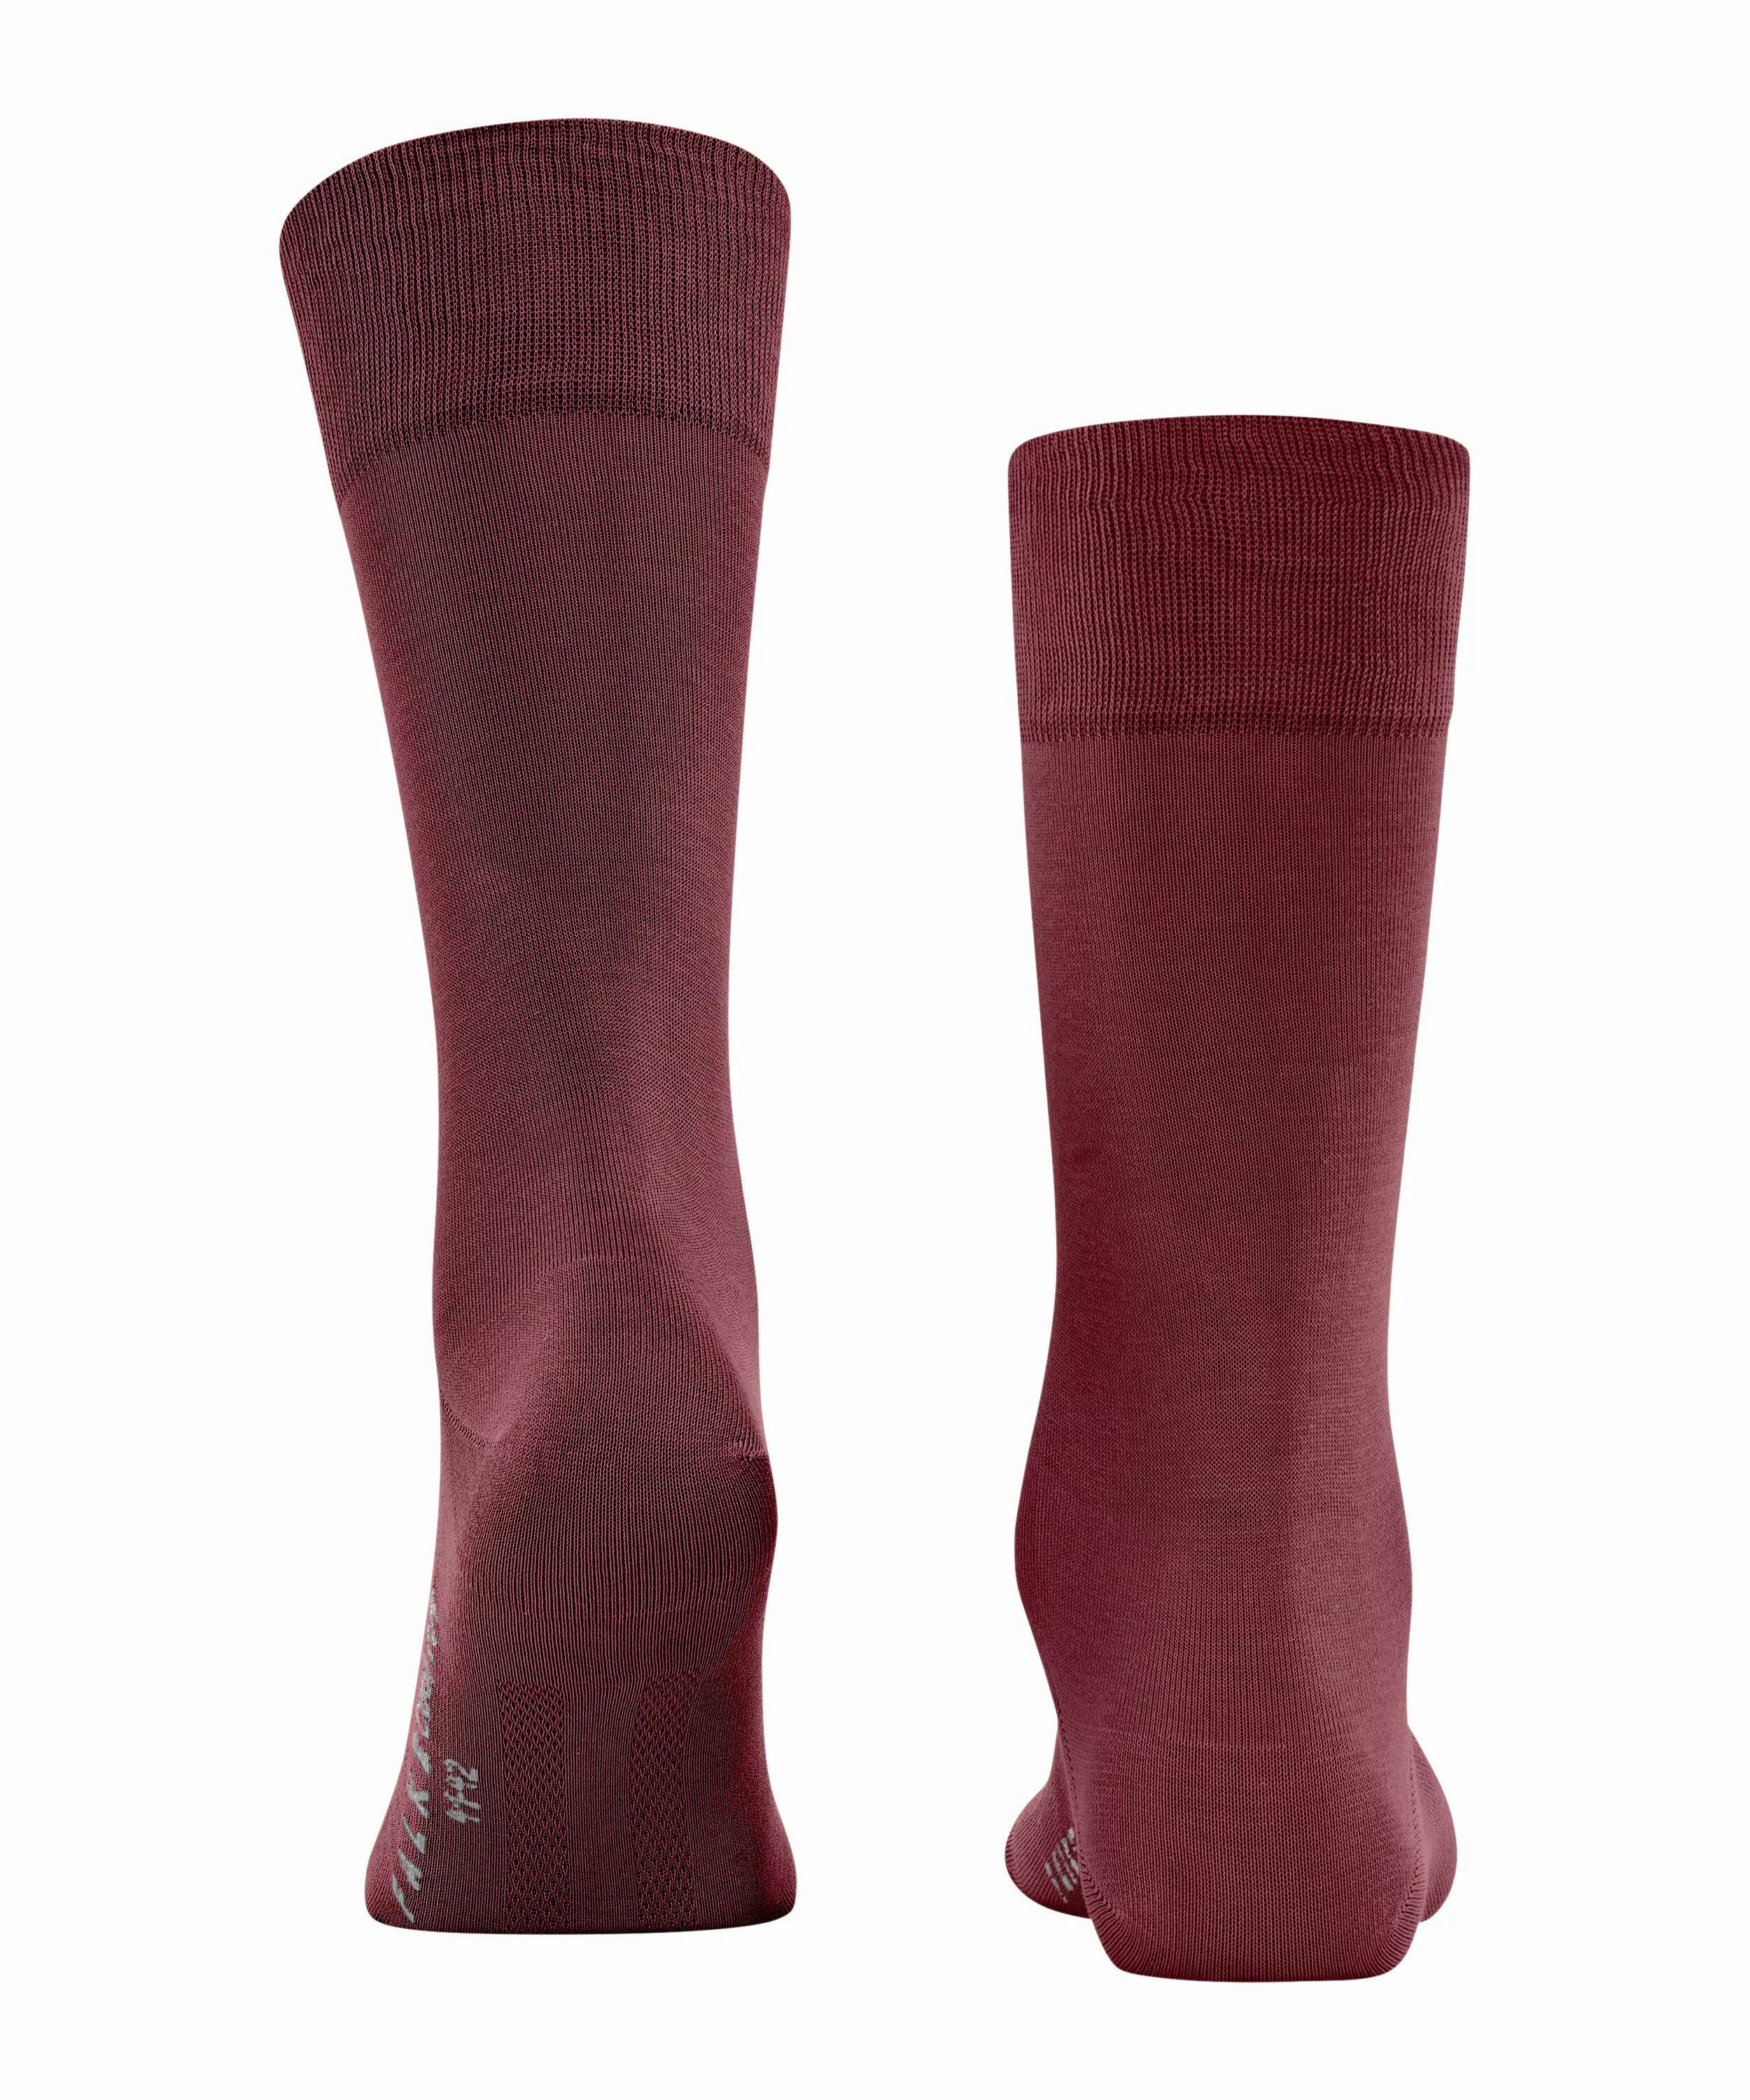 FALKE Cool 24/7 Herren Socken, 39-40, Rot, Uni, Baumwolle, 13230-841303 günstig online kaufen